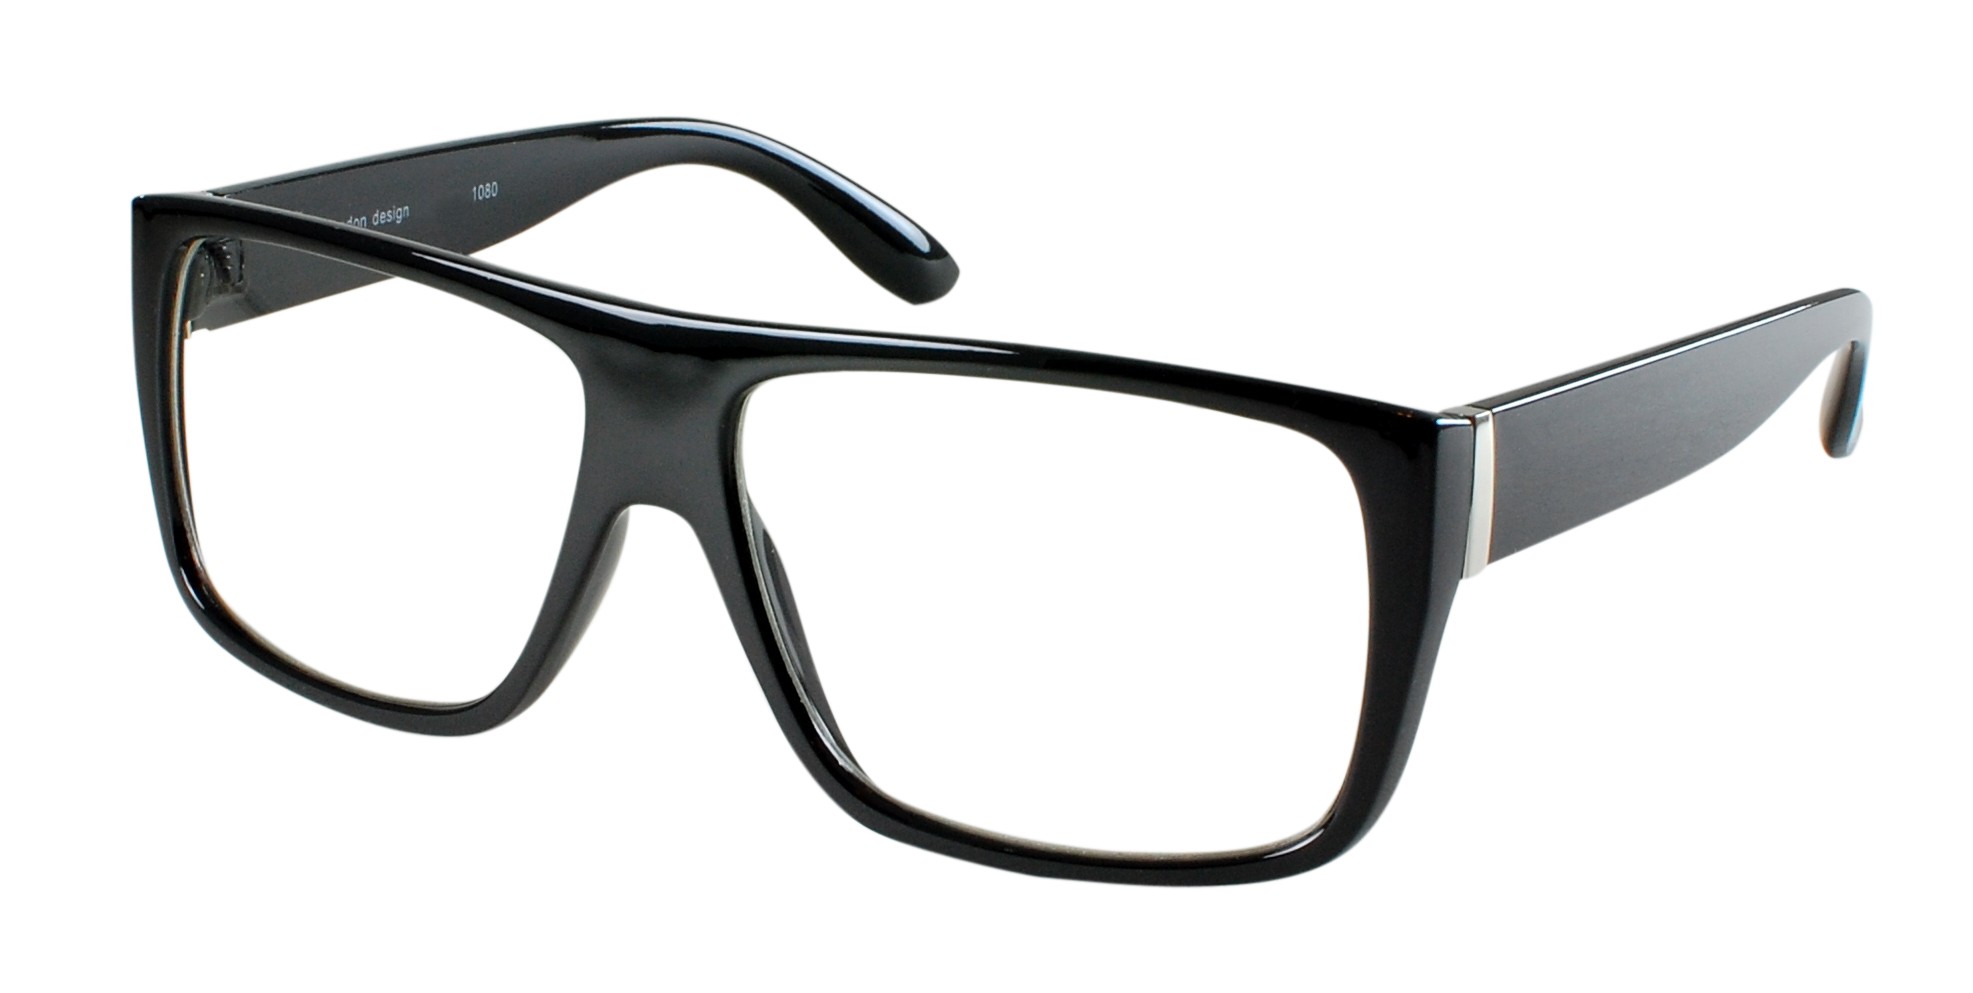 eyeglasses frames clip art - photo #10